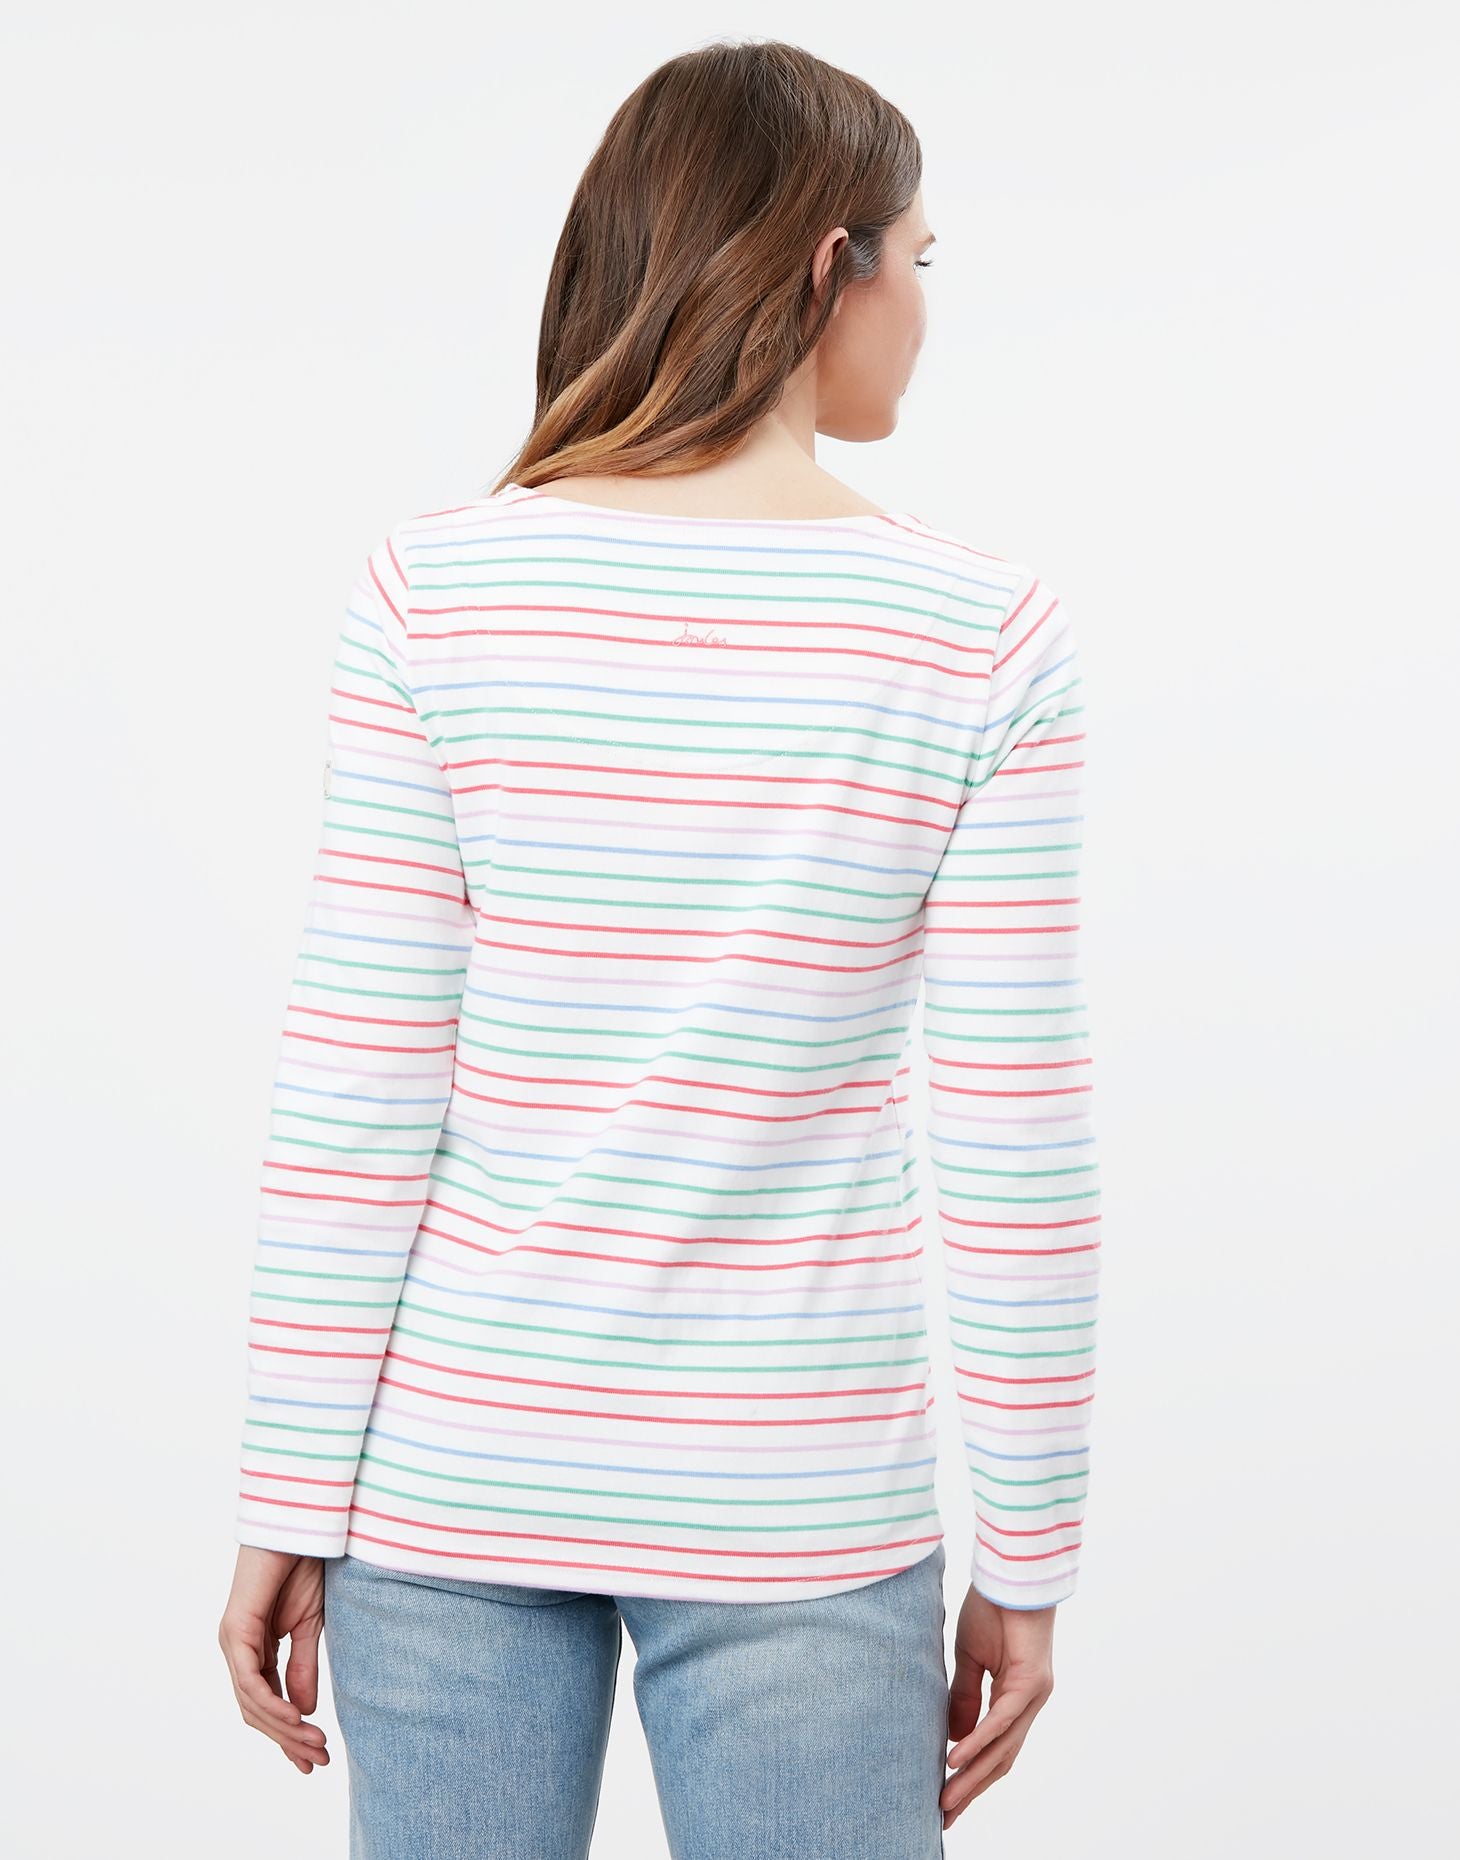 Joules - Women's Harbour Long Sleeve Jersey Top - Cream Multi Stripe